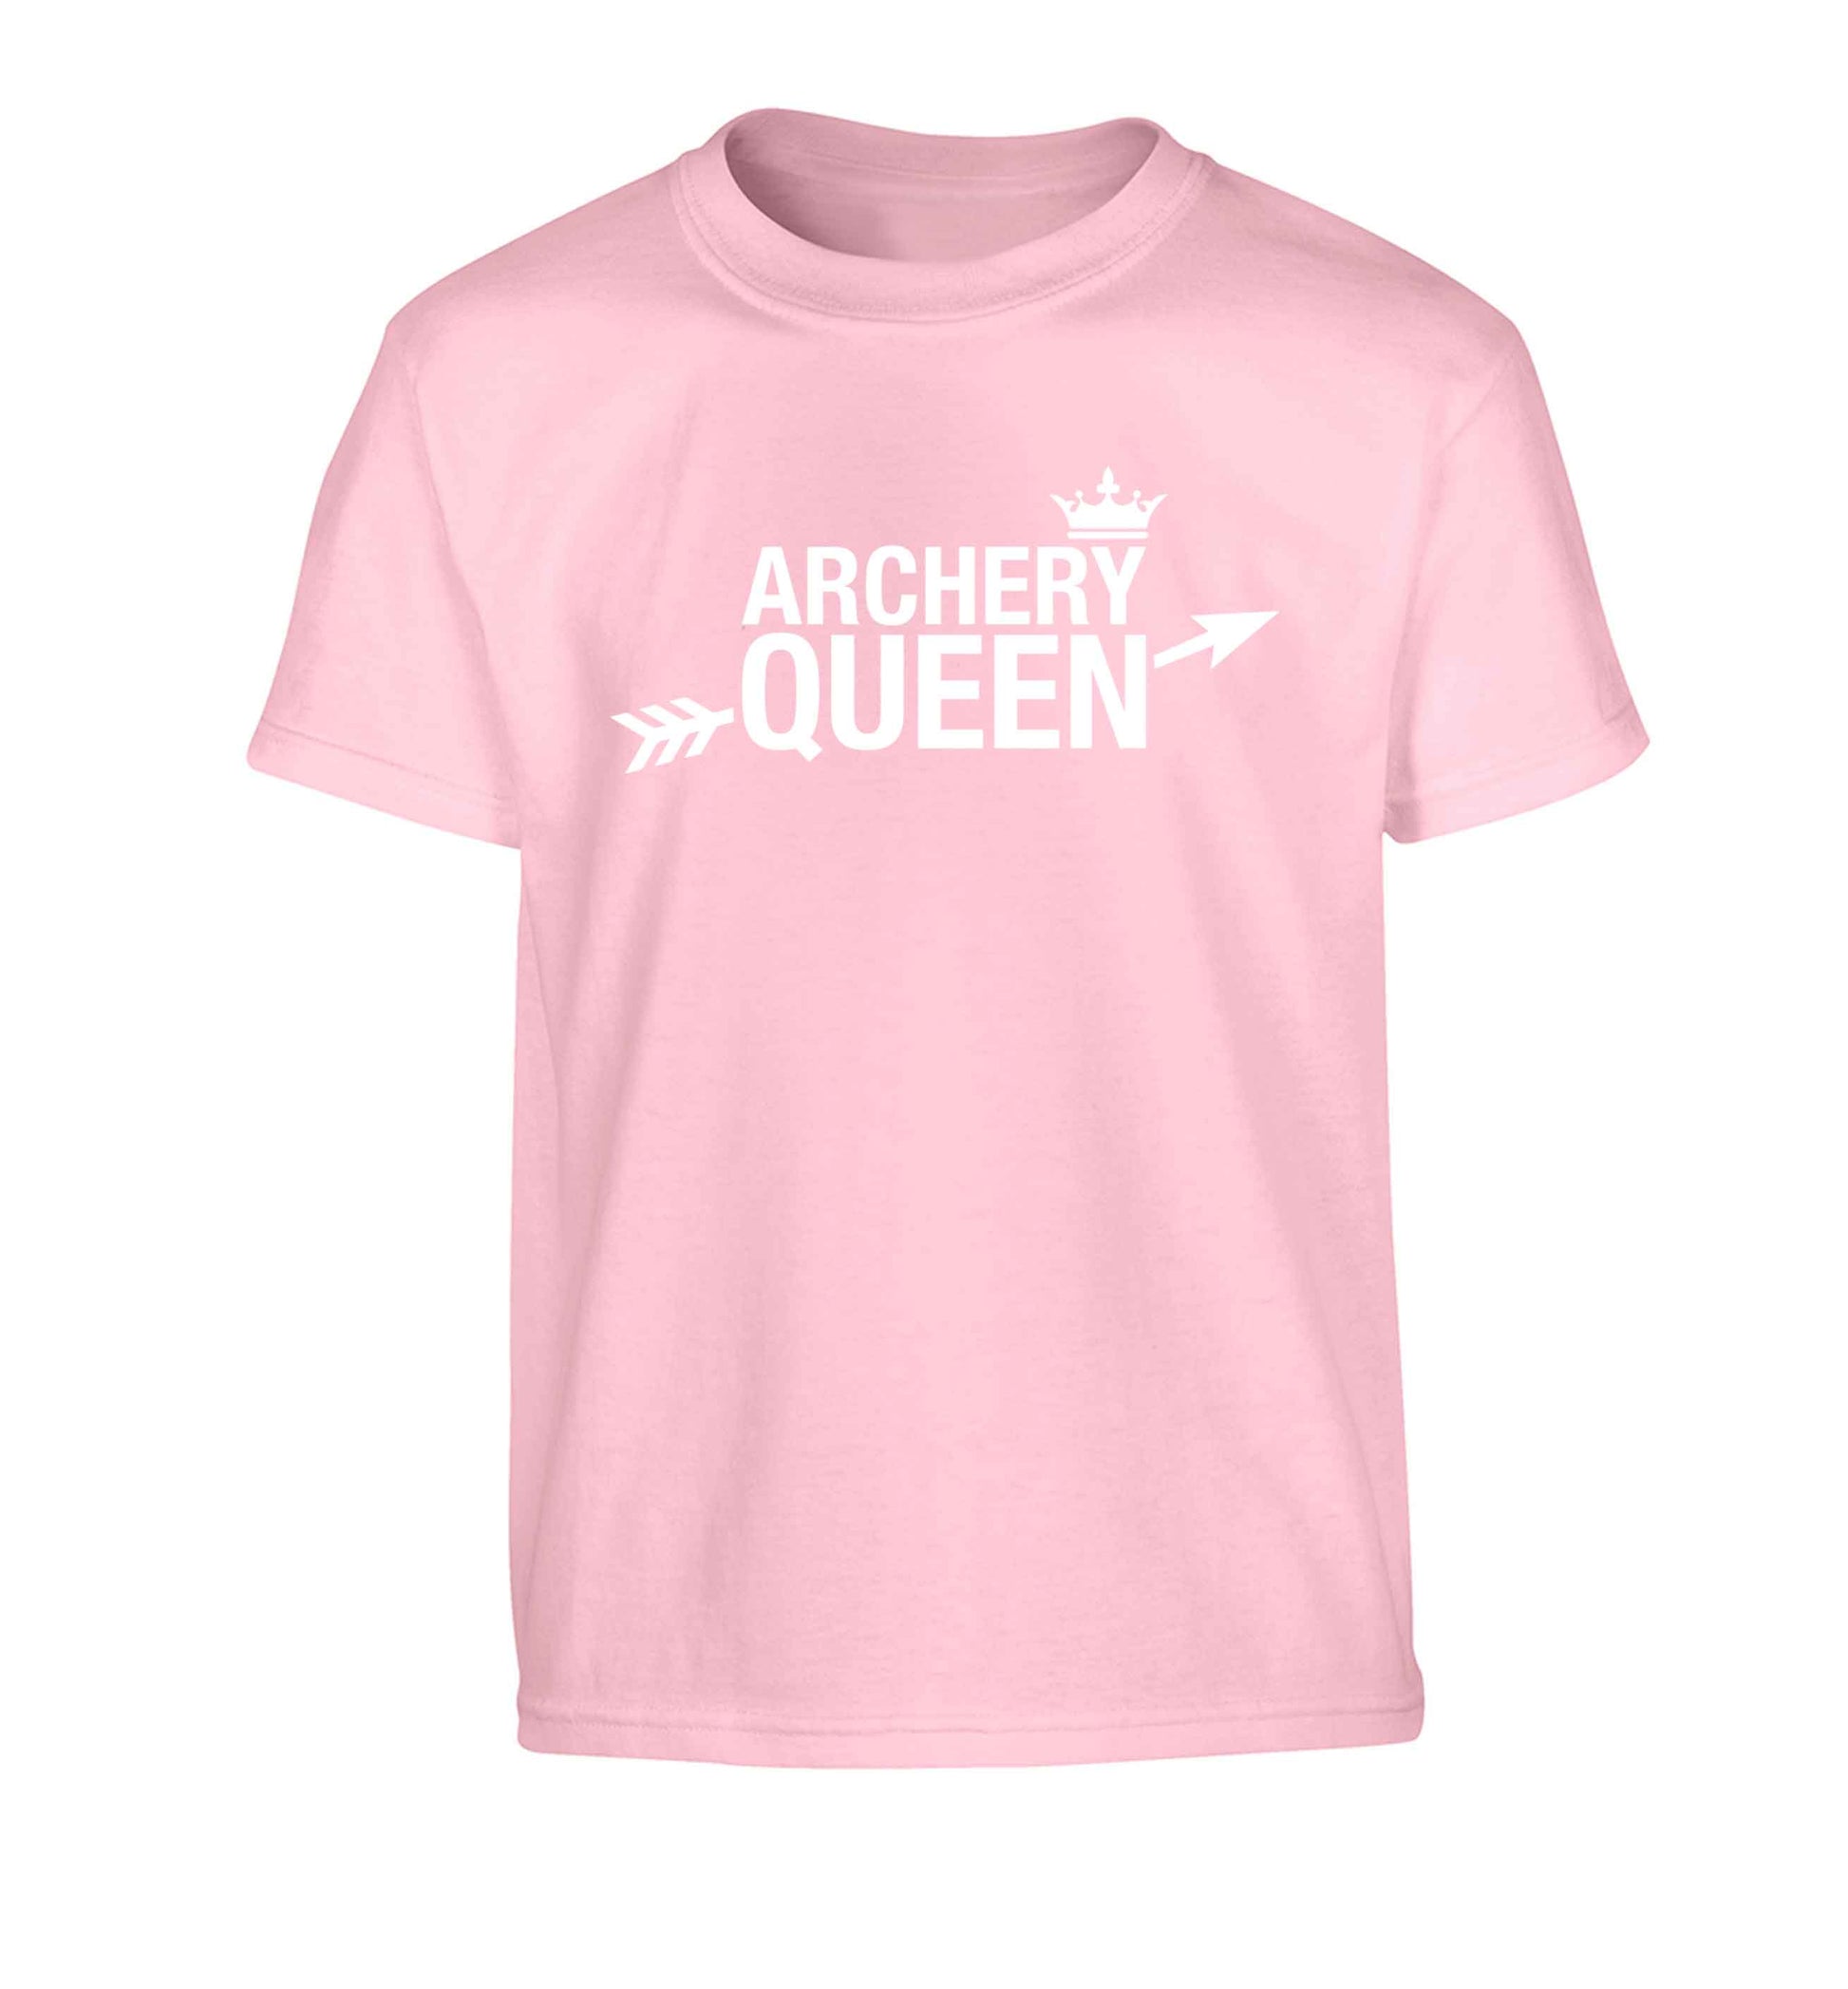 Archery queen Children's light pink Tshirt 12-13 Years